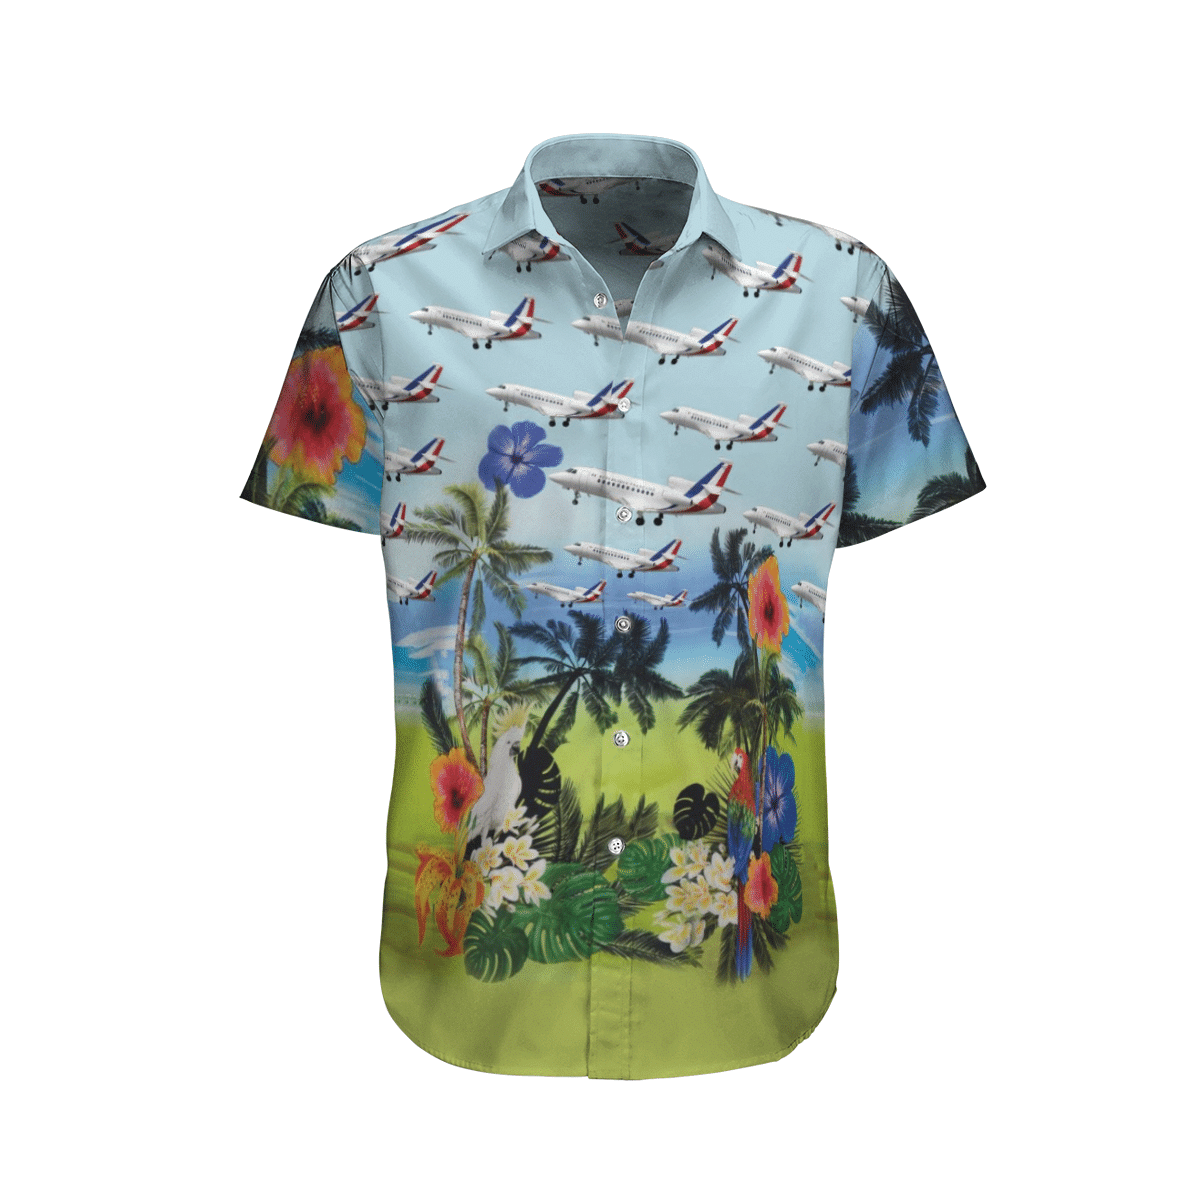 Get a new Hawaiian shirt to enjoy summer vacation 54